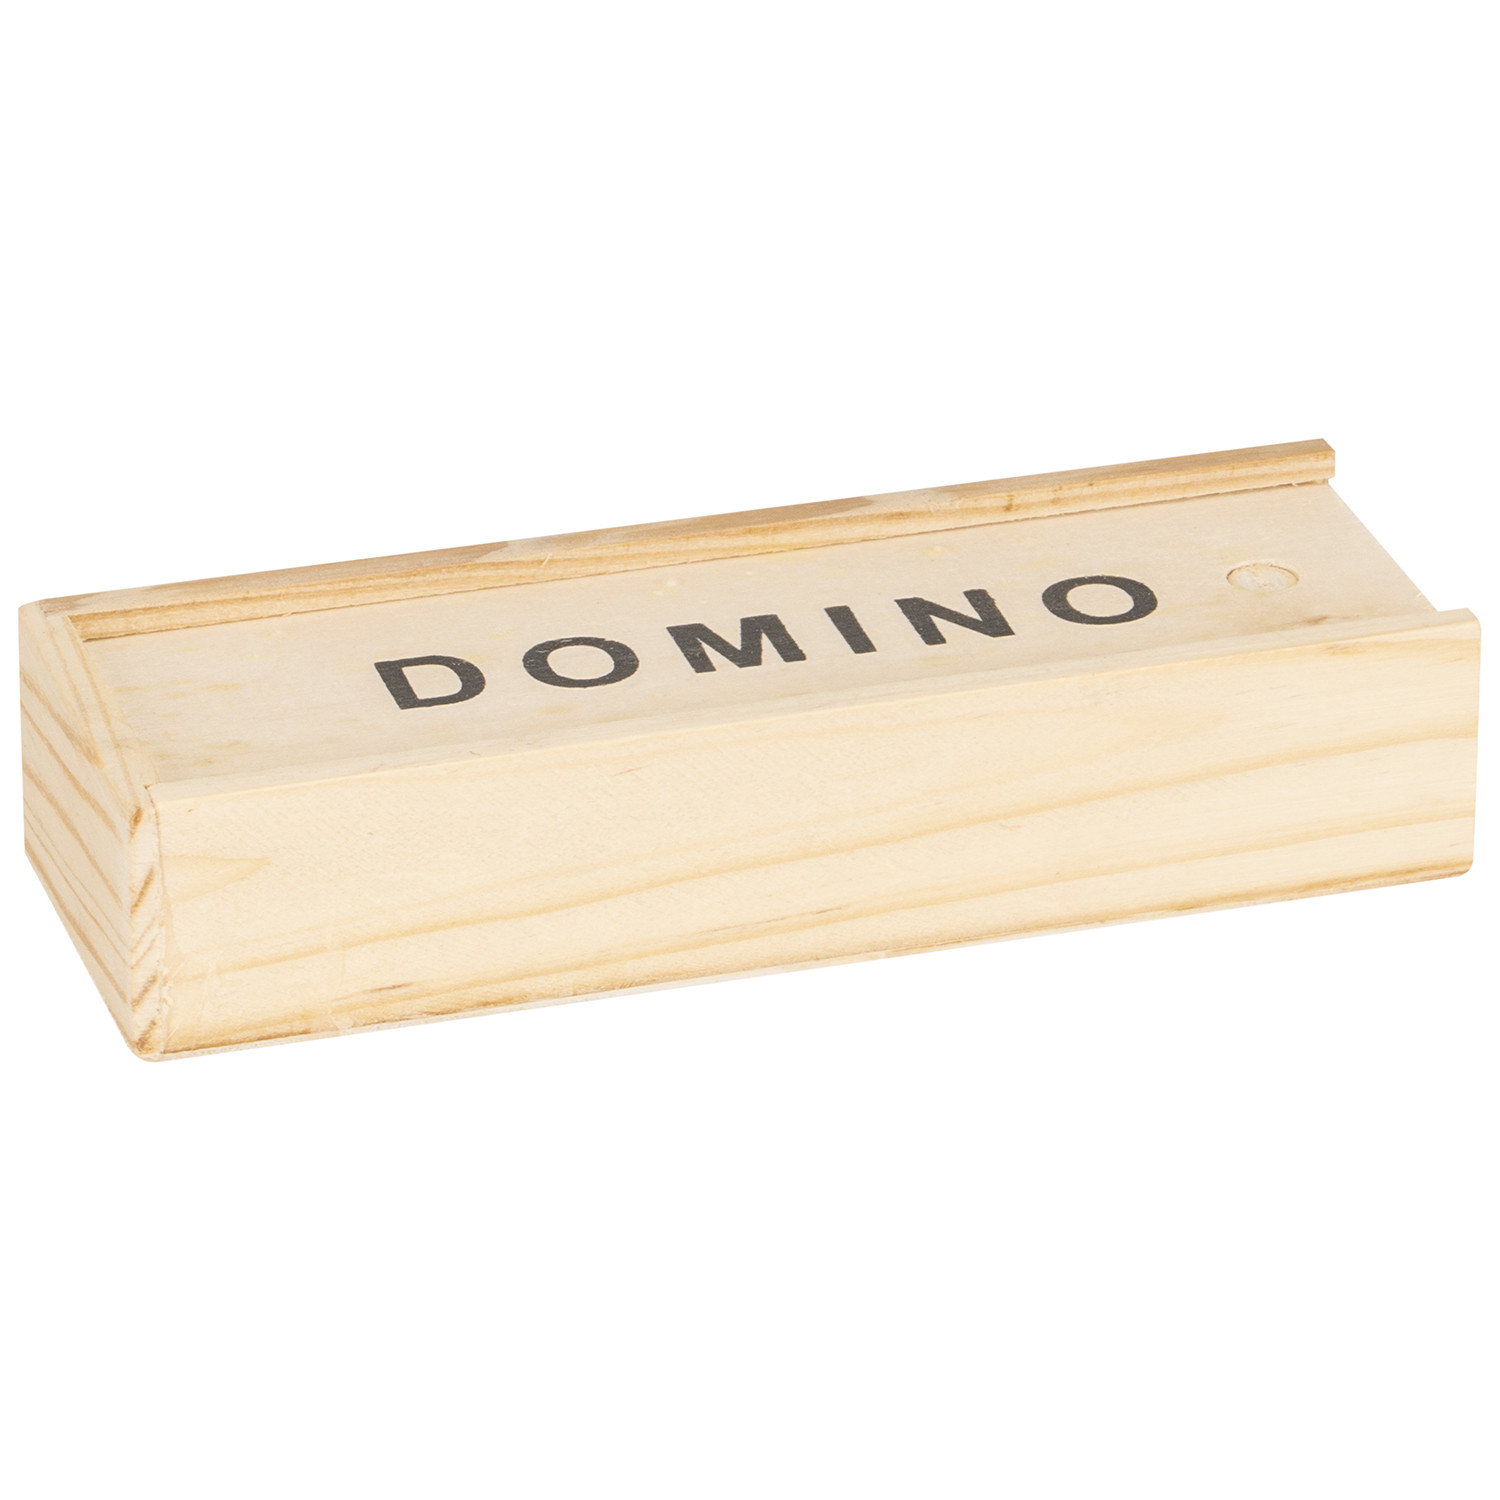 Dominoes Game in Wood Box Image 1